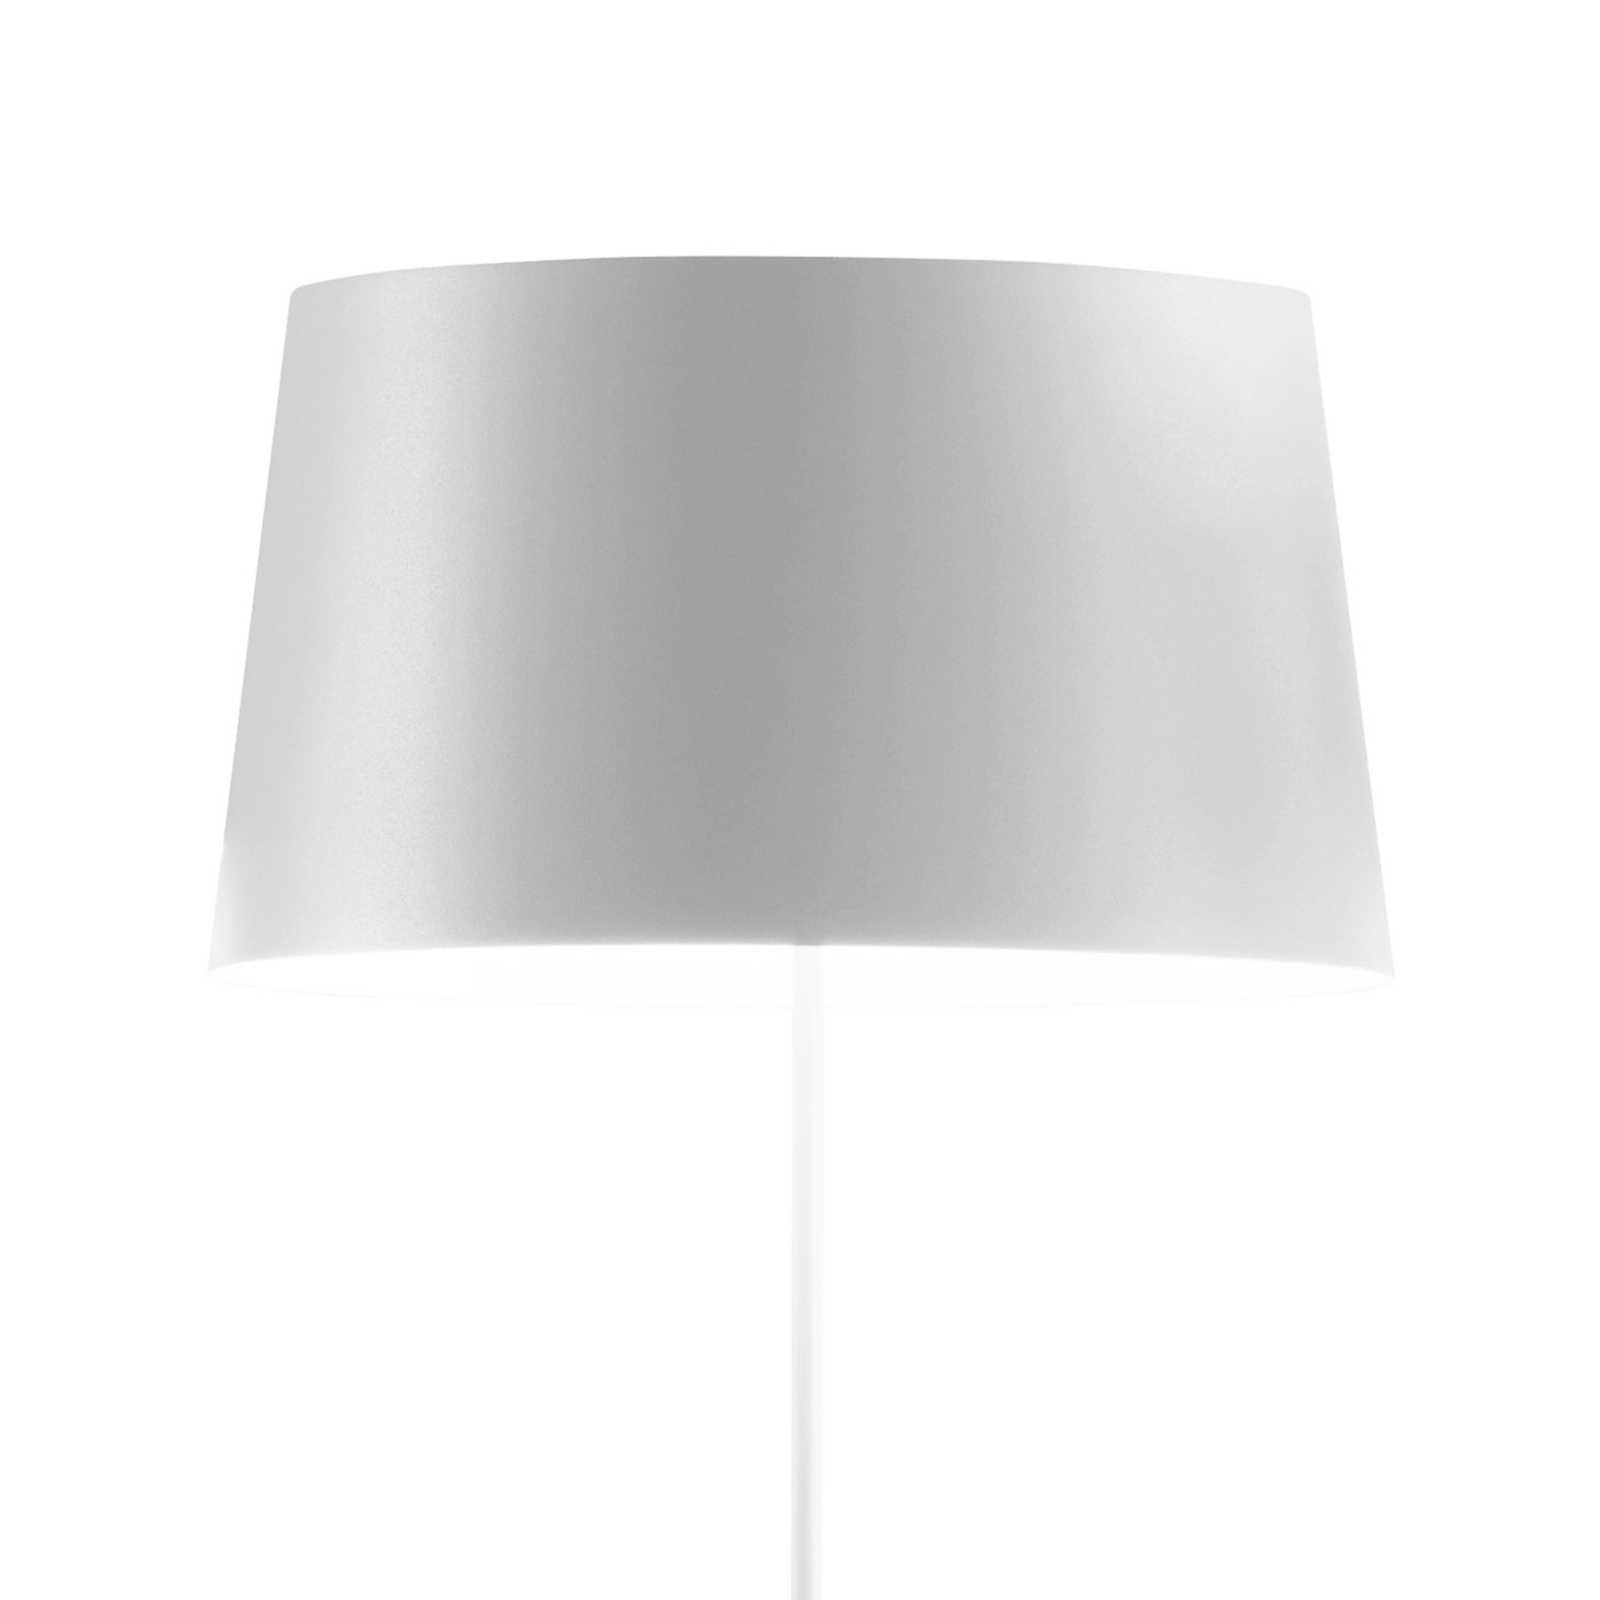 Vibia Warm 4906 lampadaire de designer, blanc